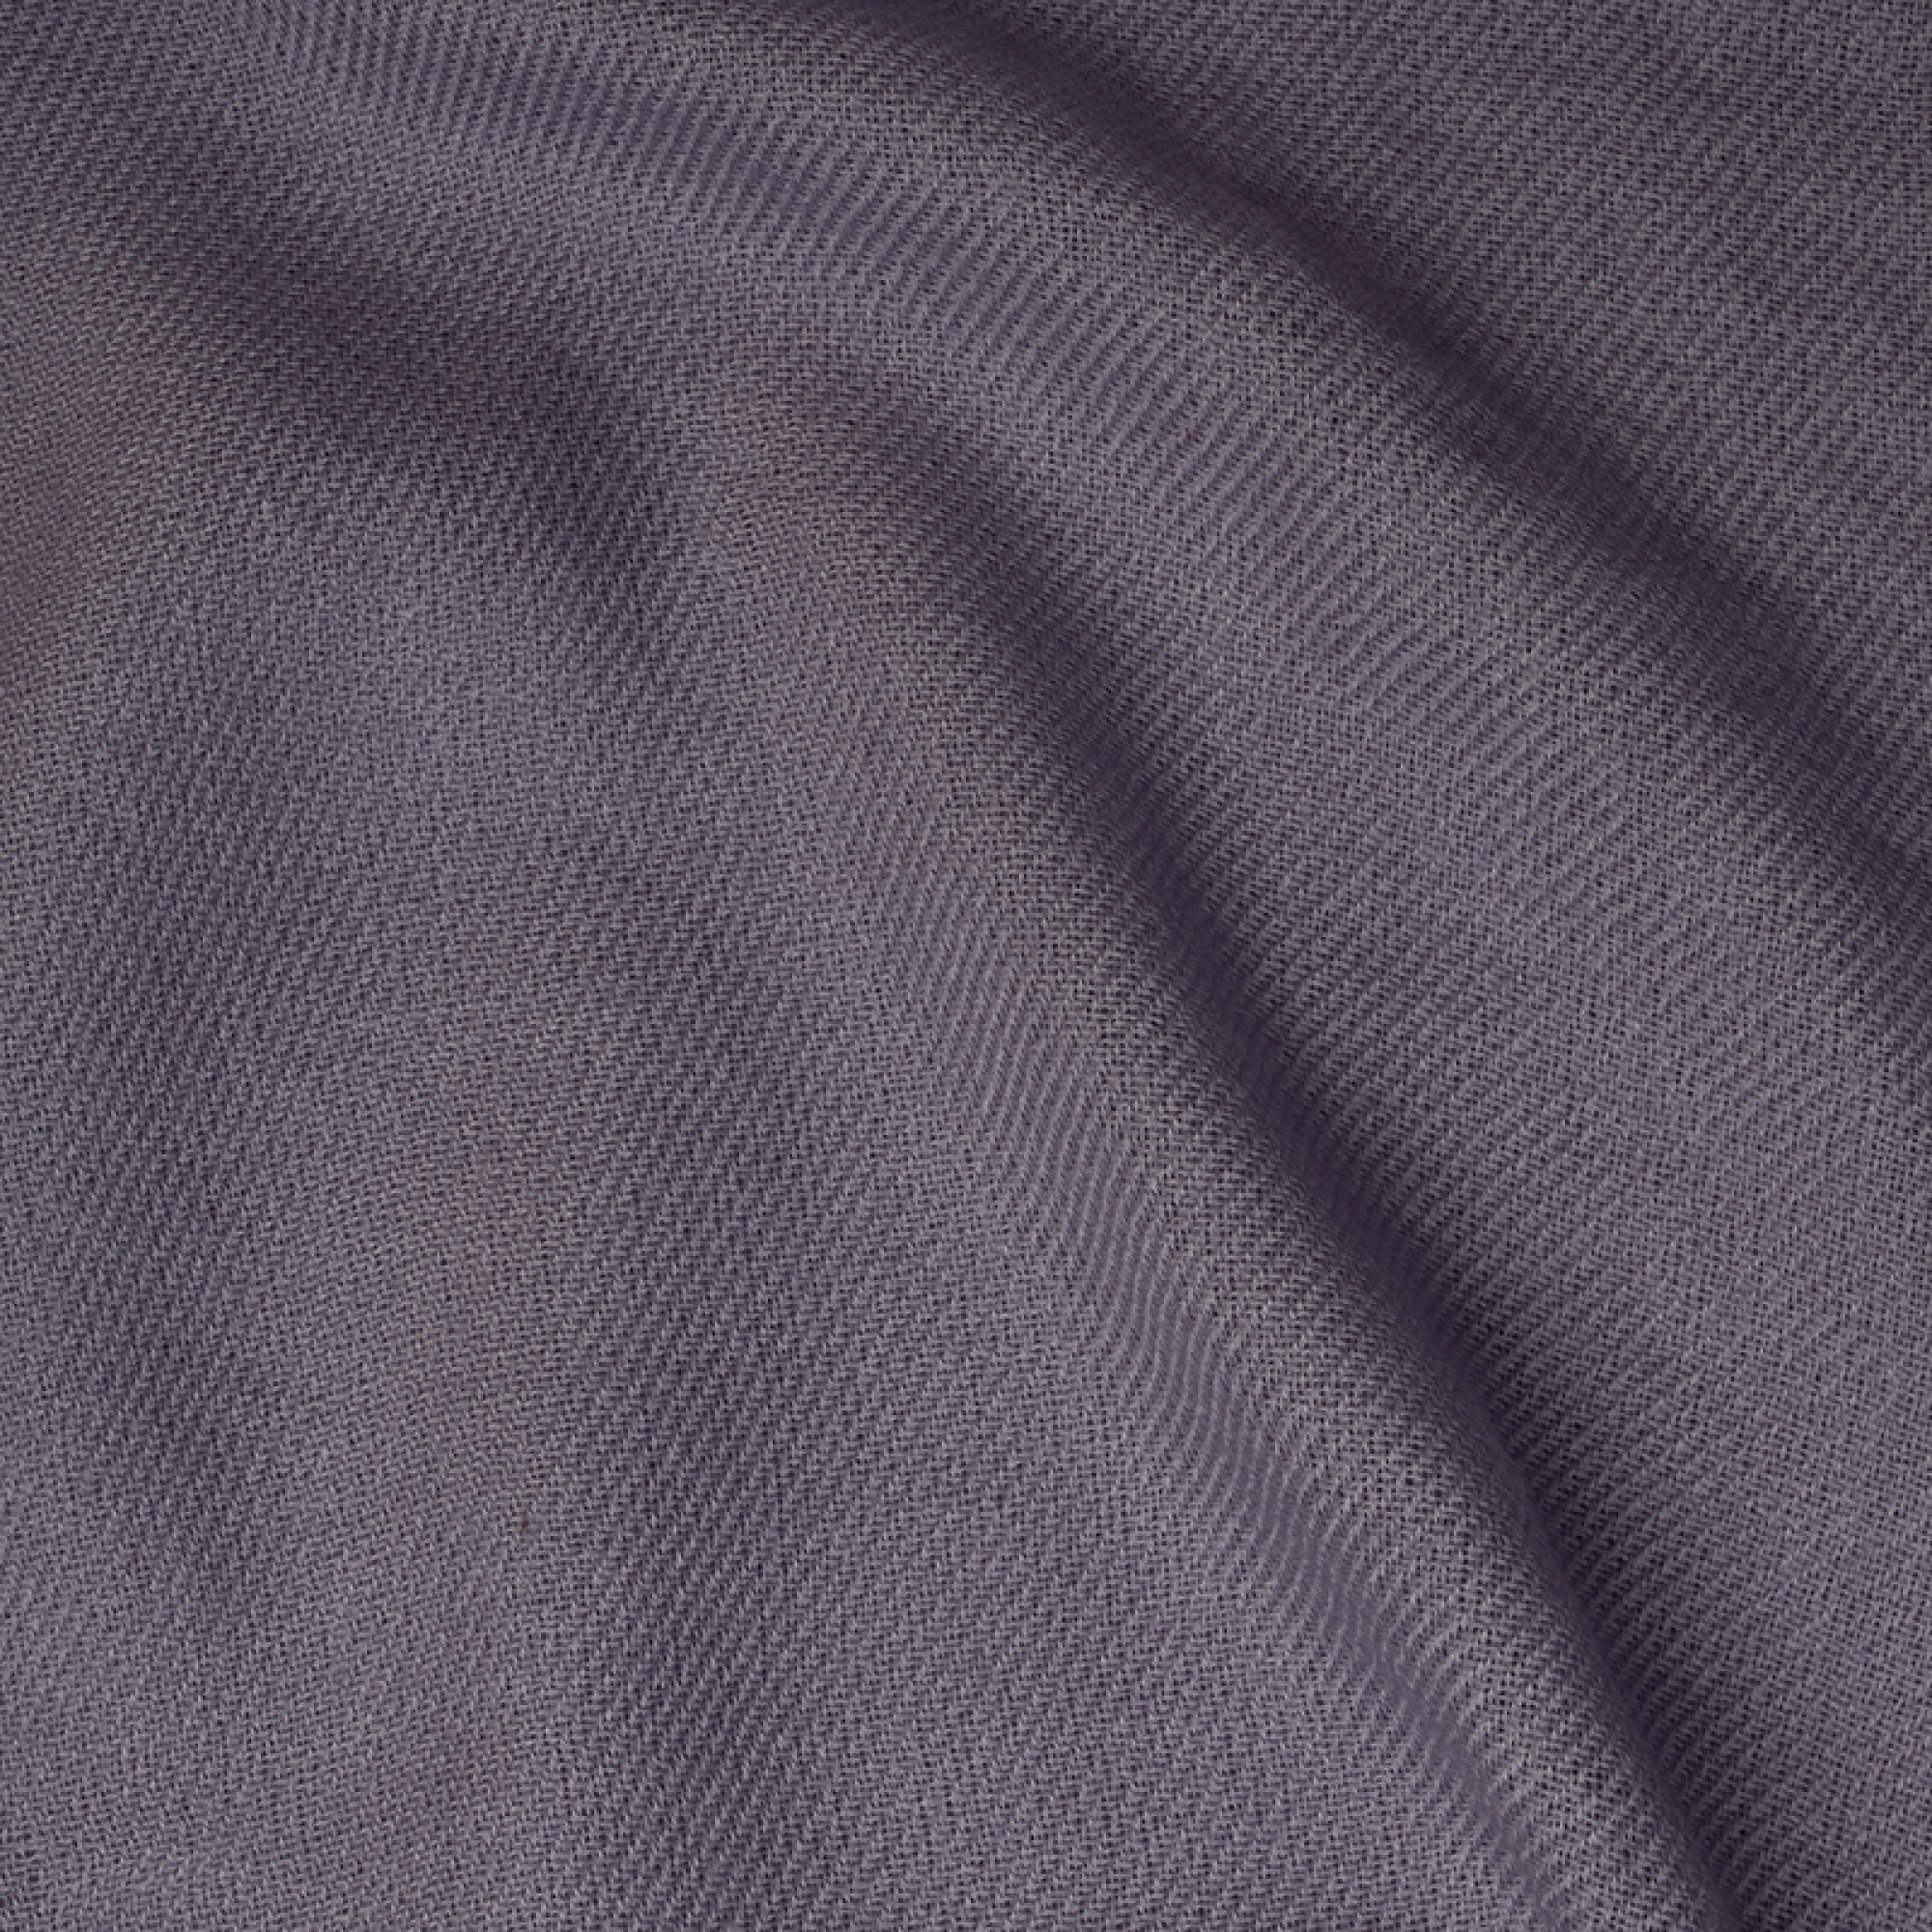 Cashmere accessories blanket frisbi 147 x 203 heirloom lilac 147 x 203 cm